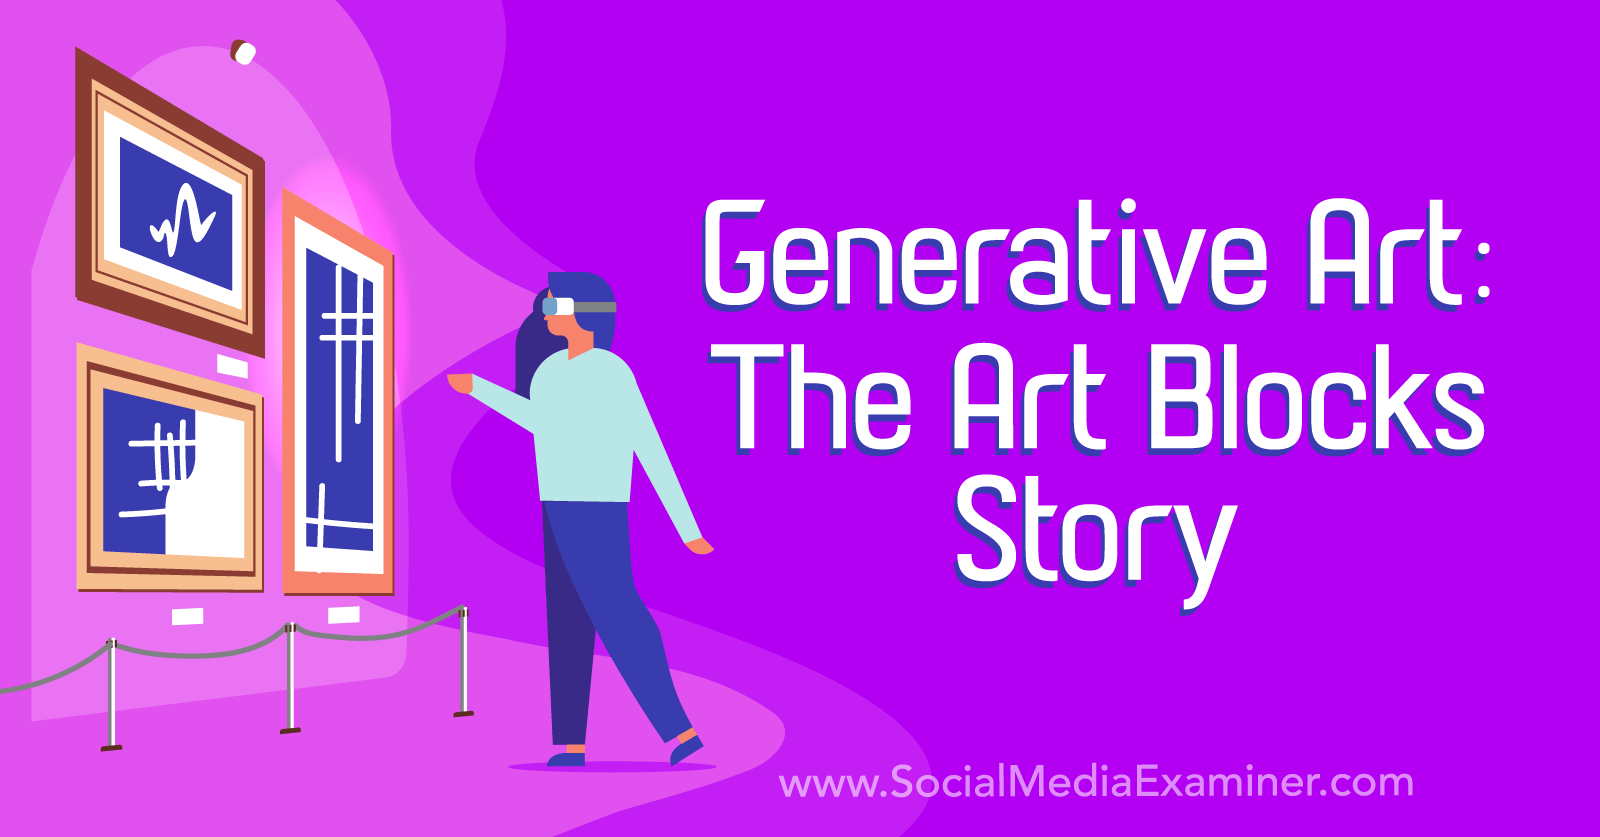 Generative Art: The Art Blocks Story by Social Media Examiner